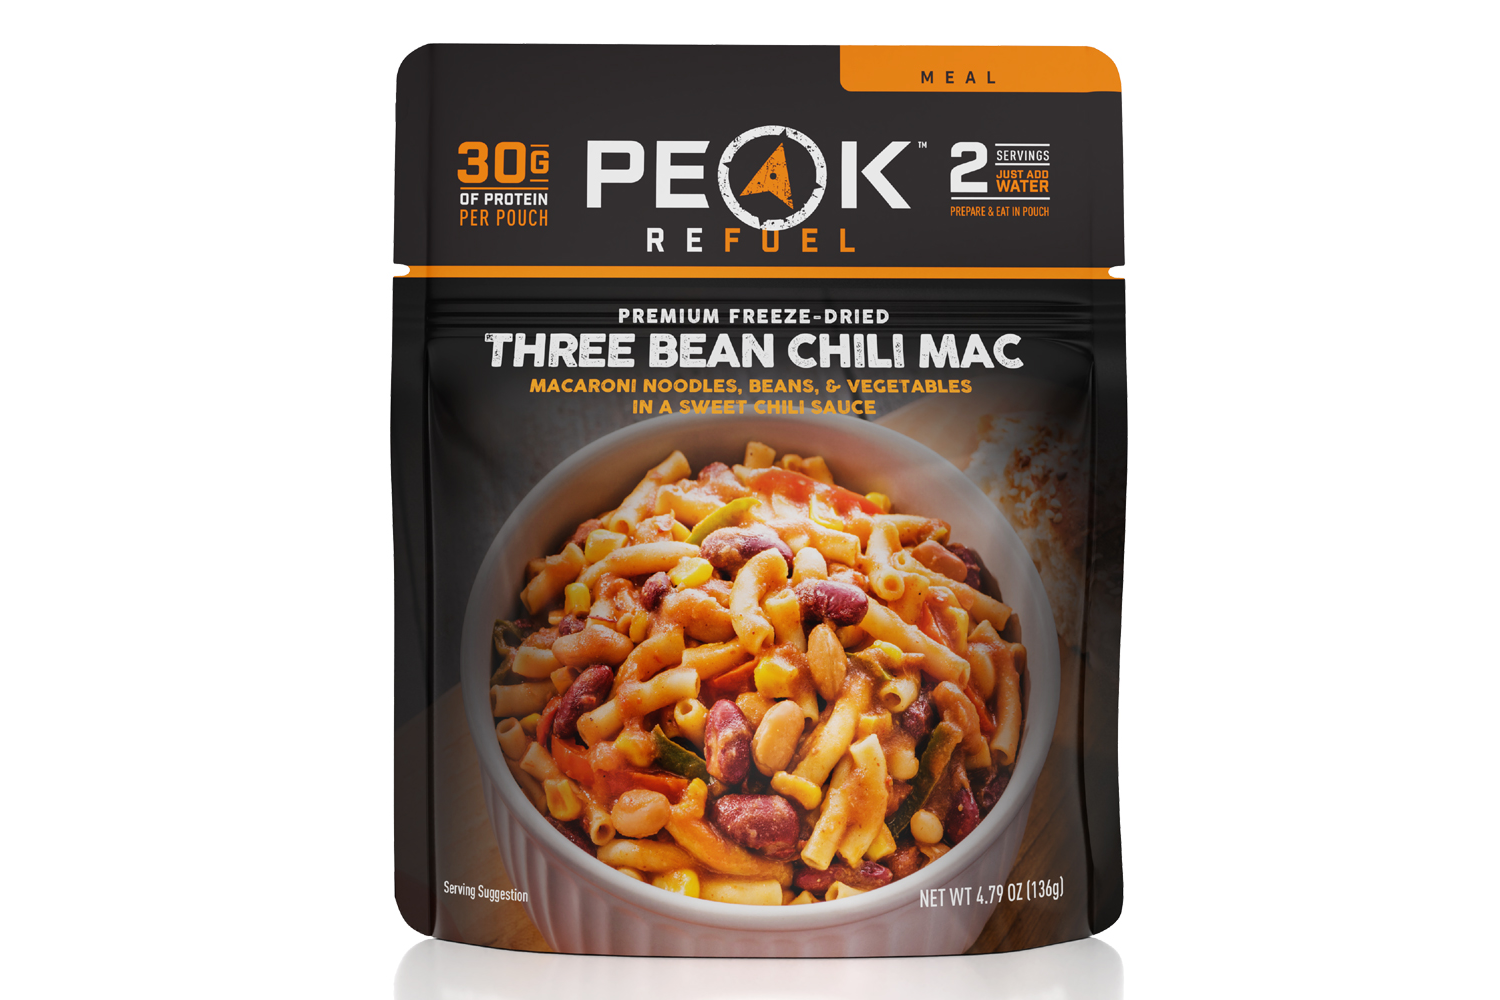 Peak Refuel Three Bean Chili Mac (Vegan) 2 Serving Pouch